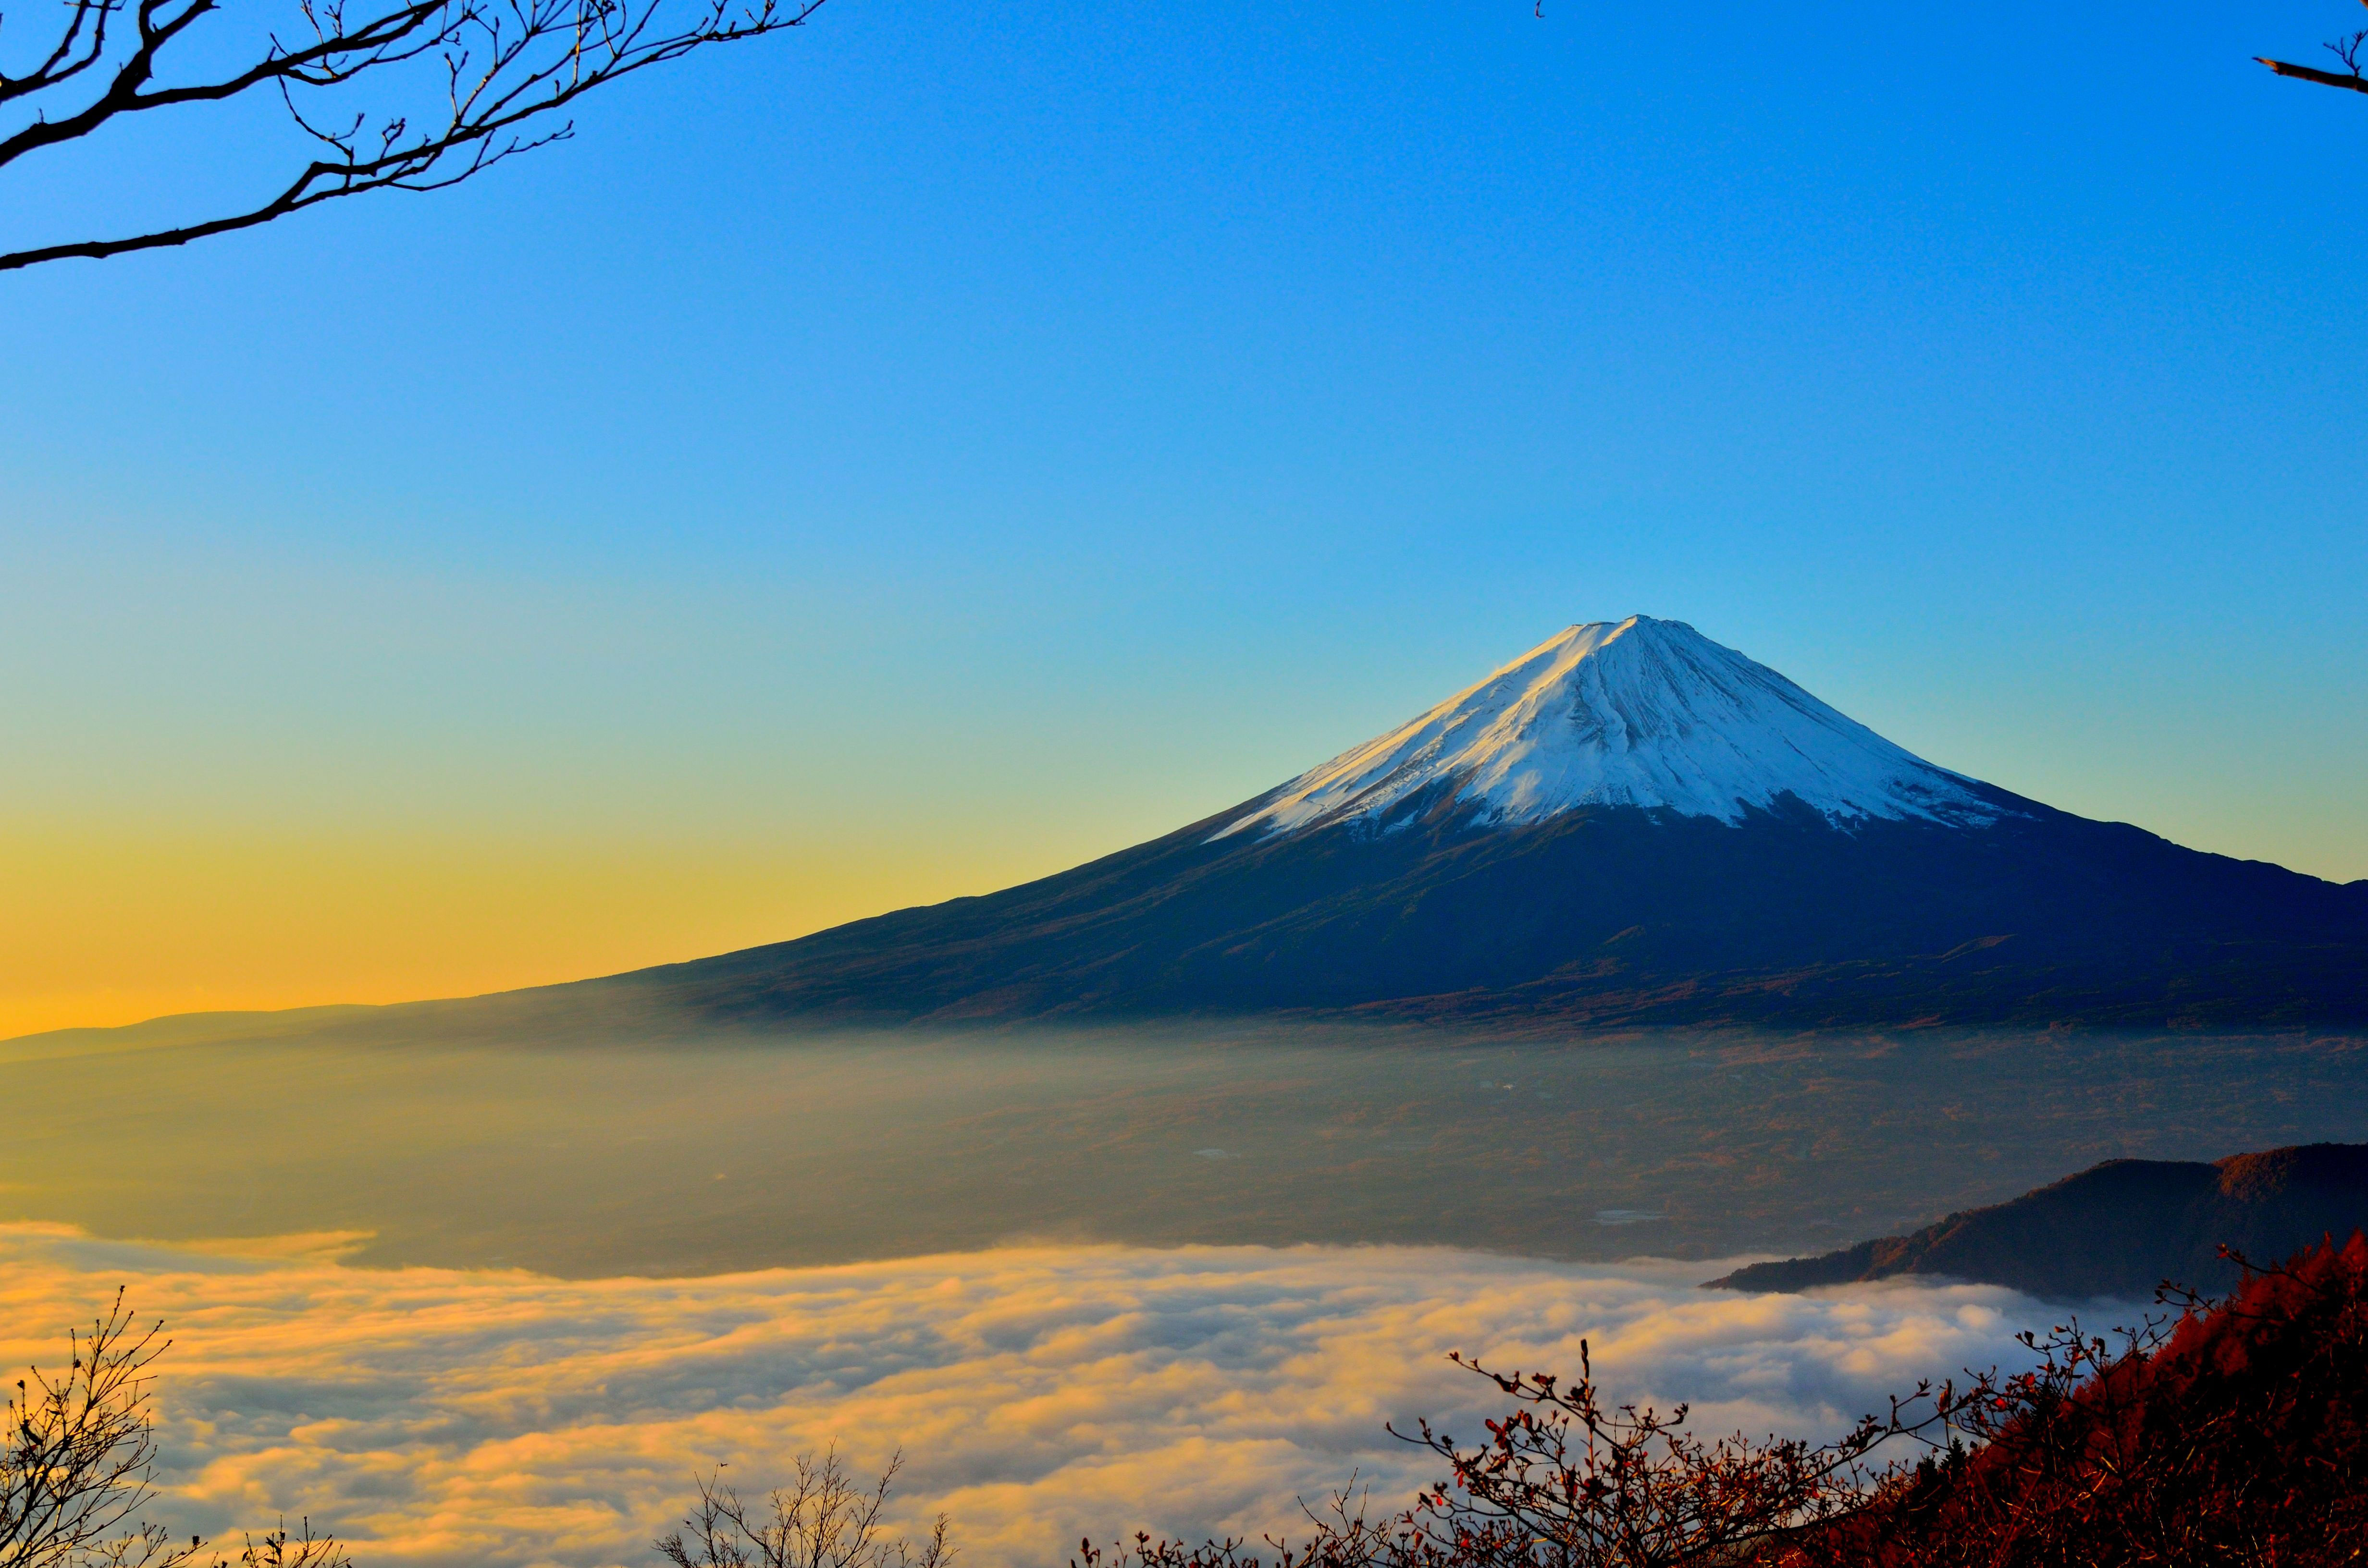 Mount Fuji Sunrise Wallpaper Hd Nature 4k Wallpapers Images And